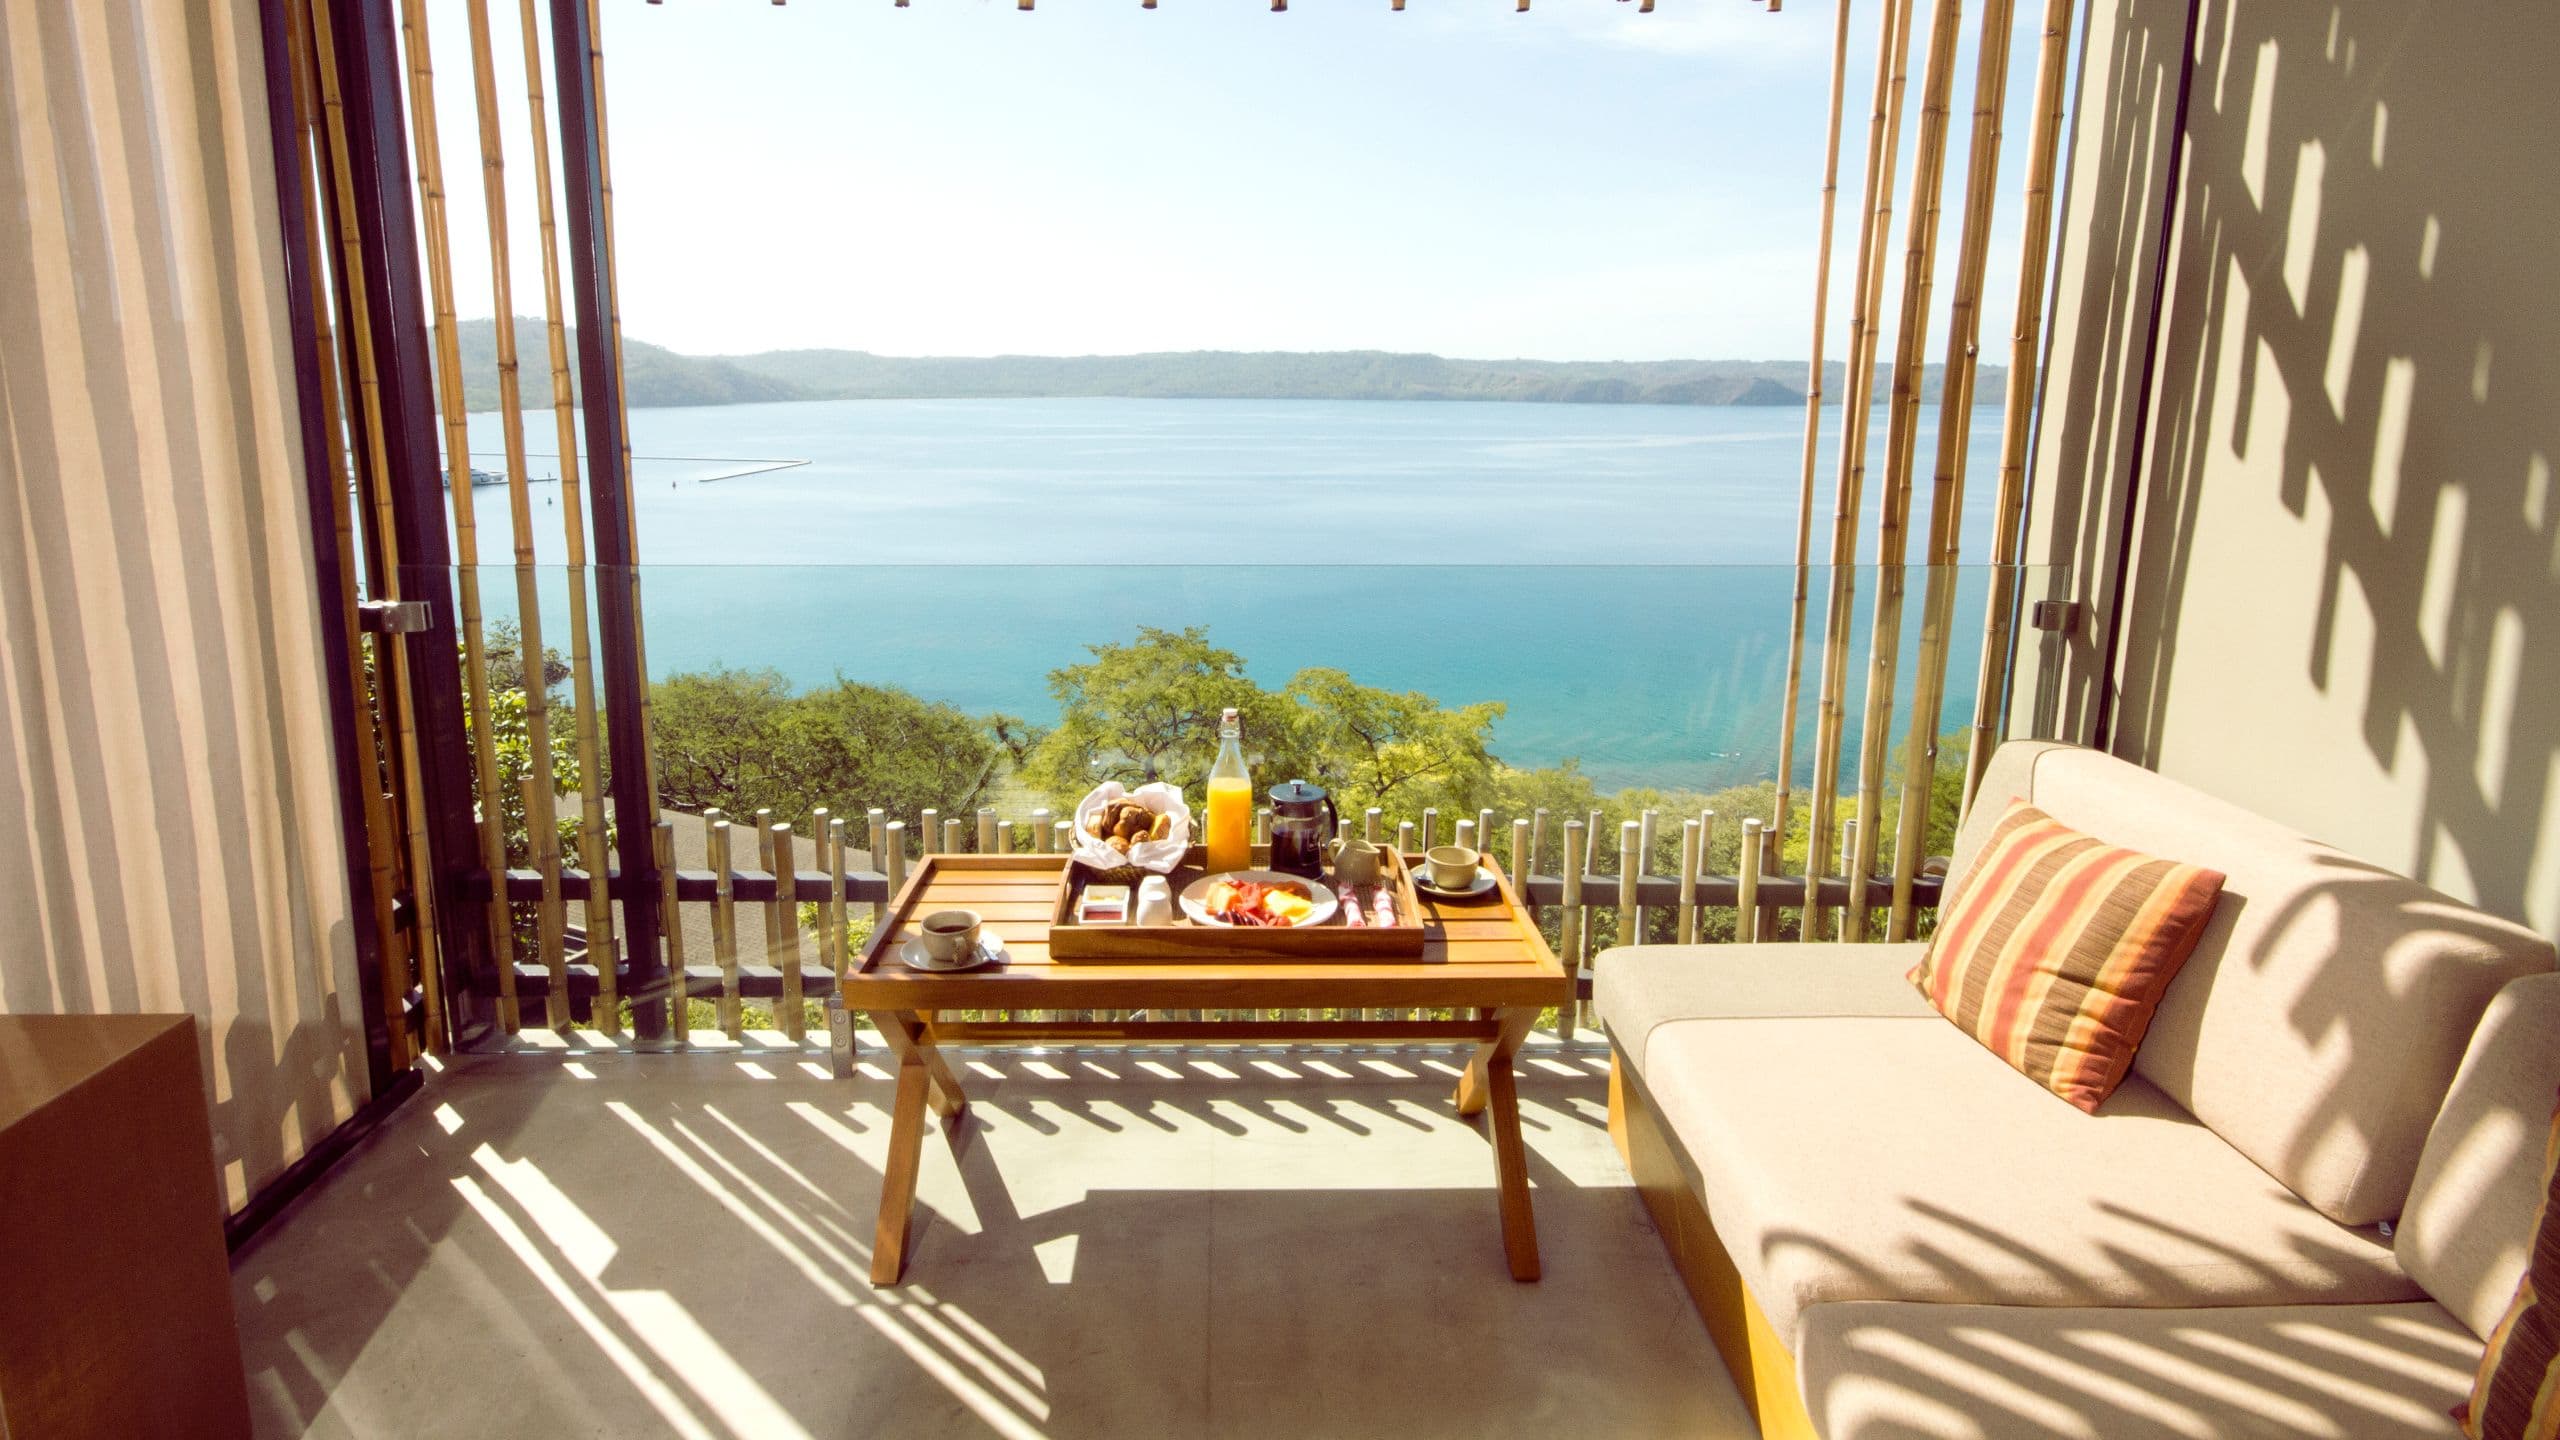 Andaz Costa Rica Resort at Peninsula Papagayo Eat in Breakfast w View